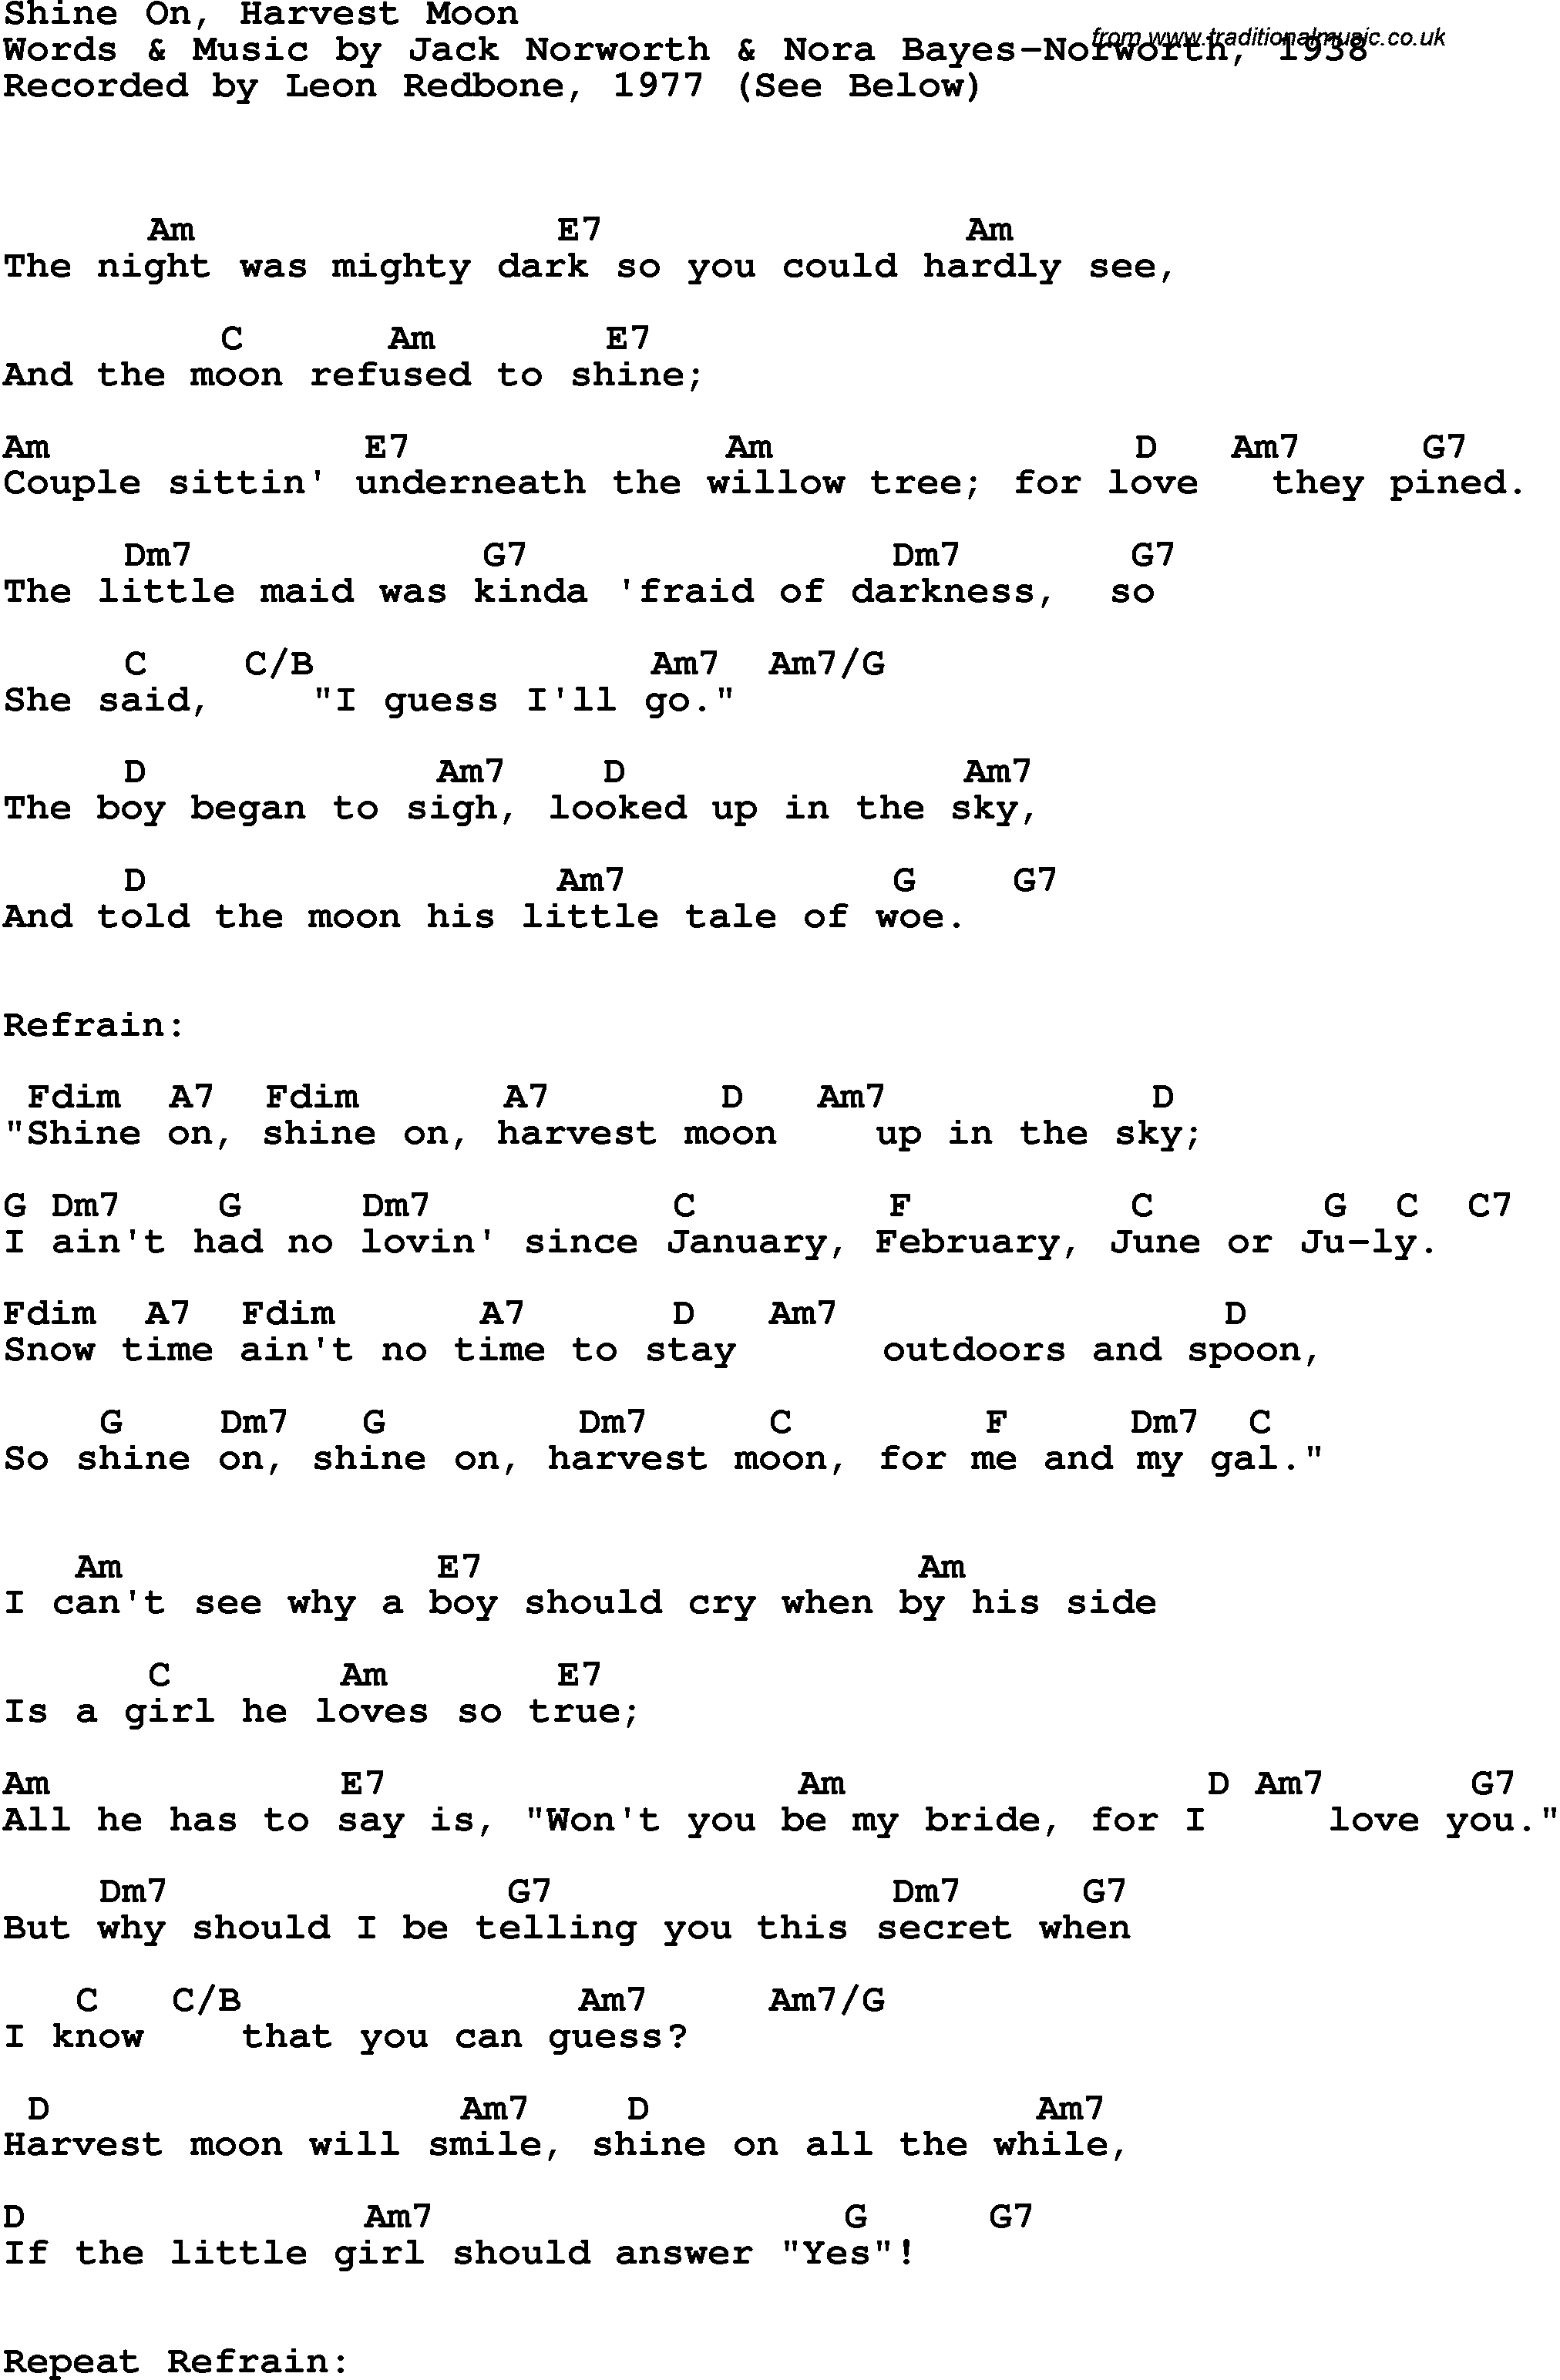 Song Lyrics with guitar chords for Shine On, Harvest Moon - Leon Redbone, 1977